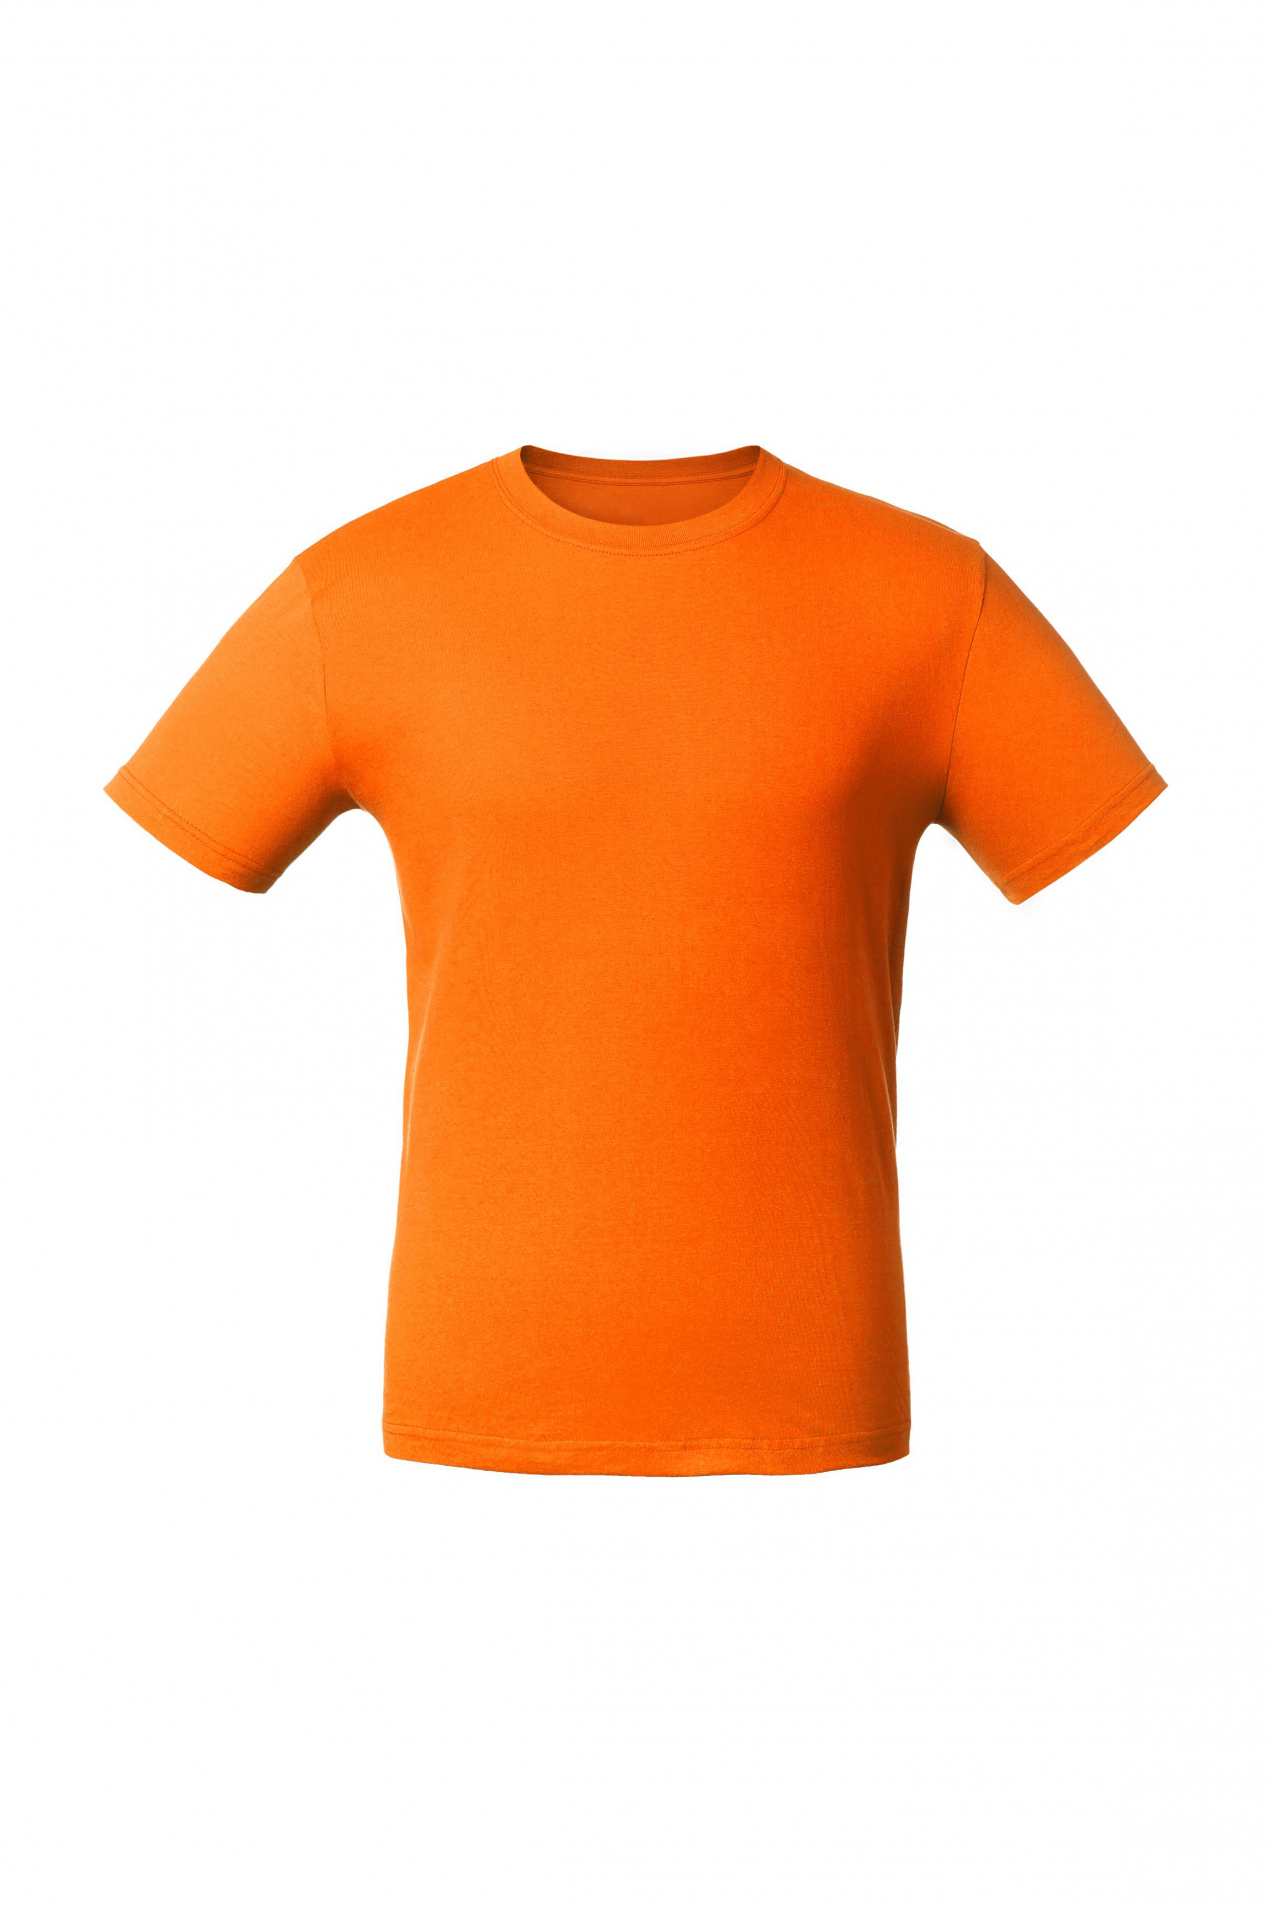 Футболка унисекс BASIC, оранжевая